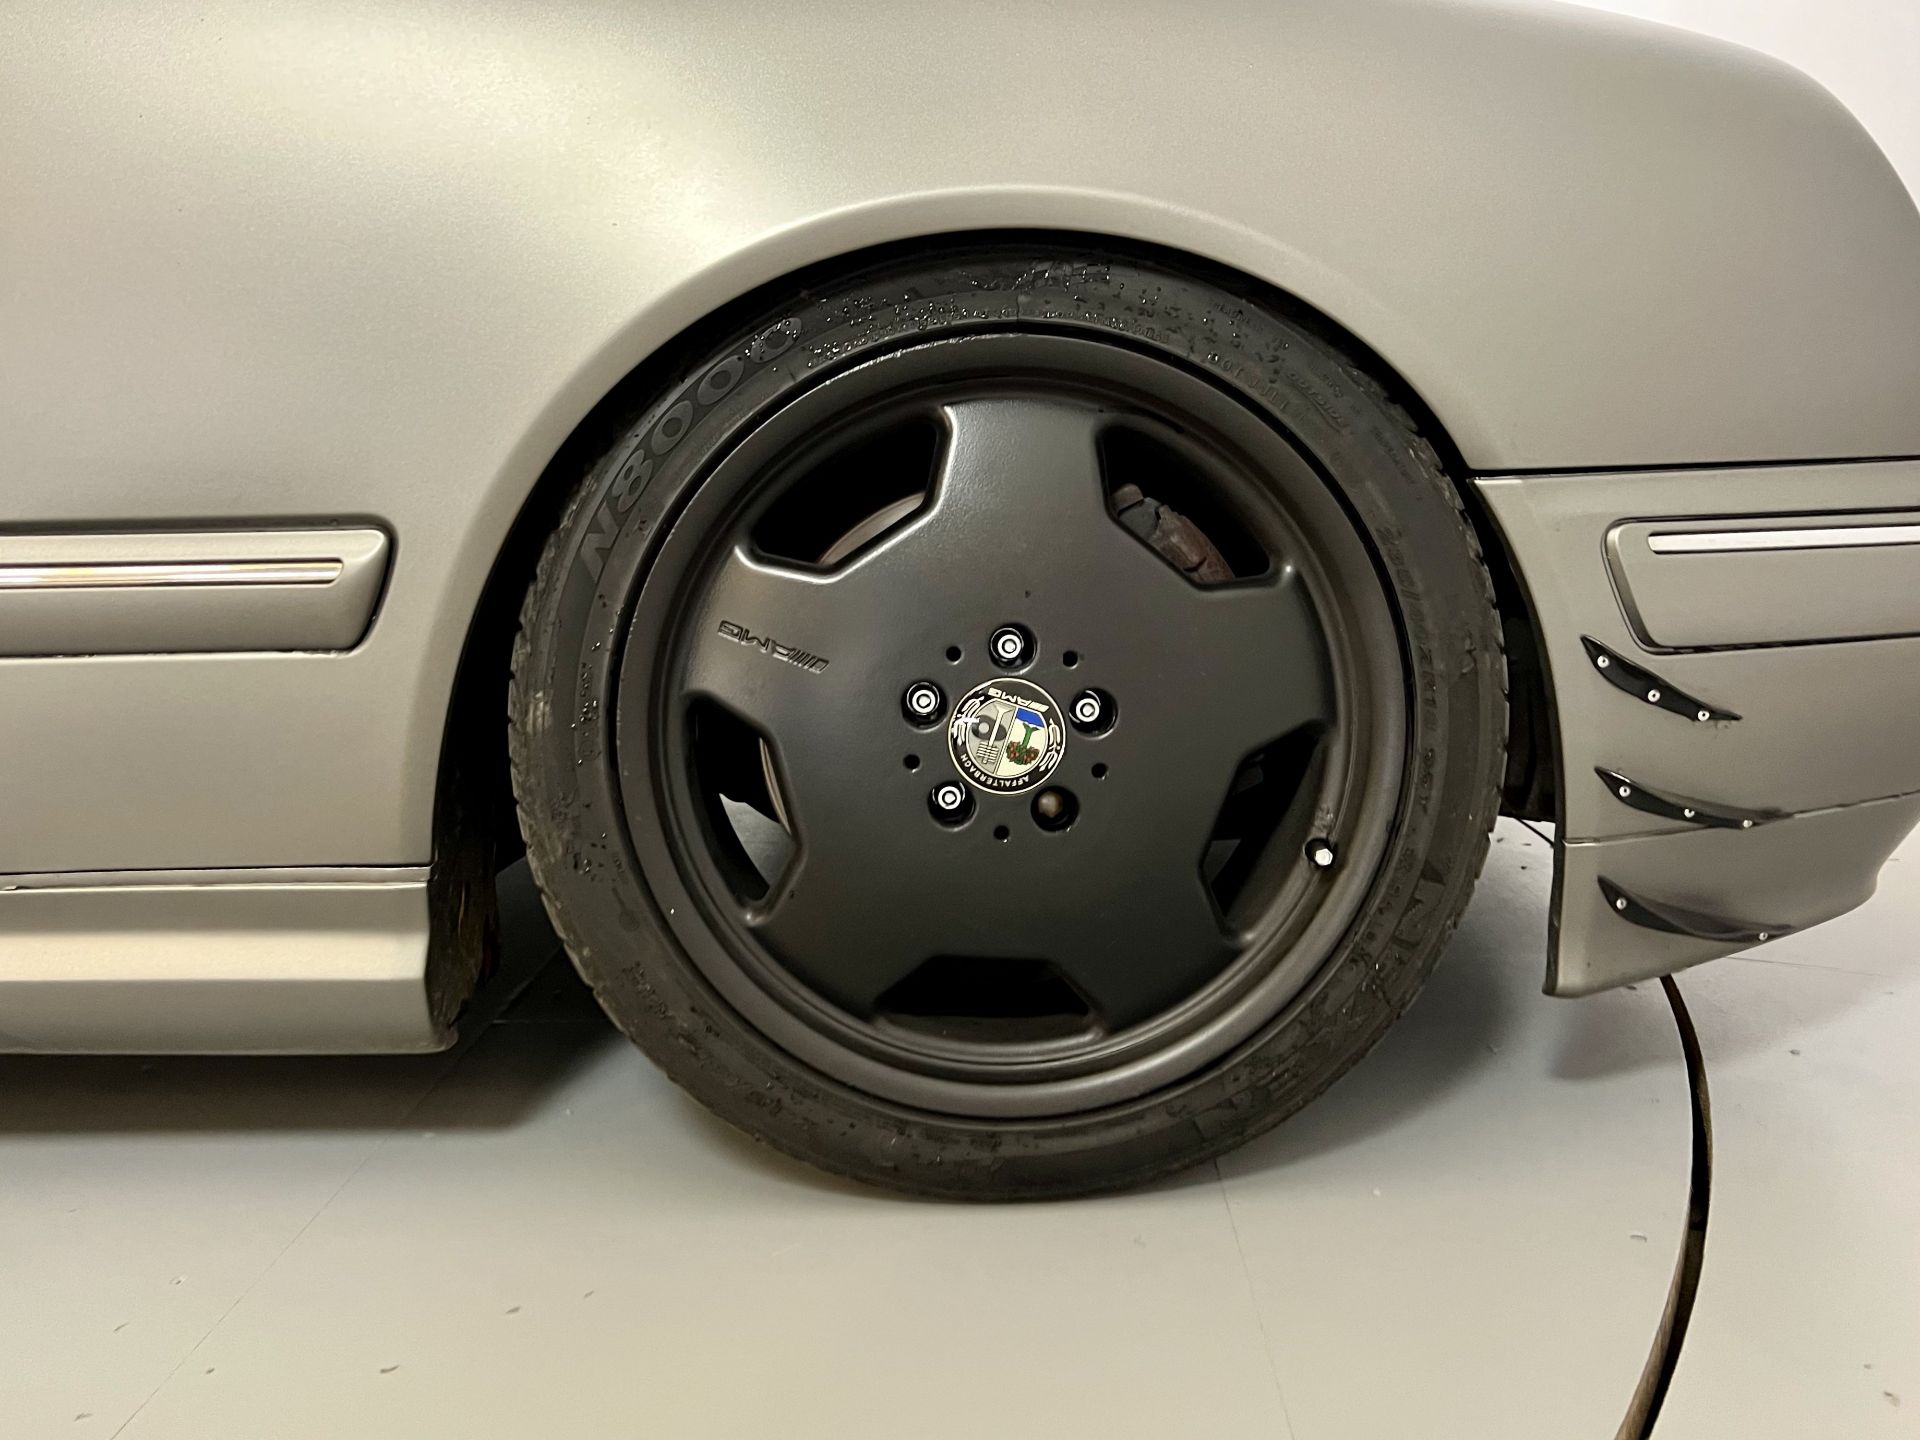 Mercedes-Benz E55 AMG Drift Car - Image 13 of 40